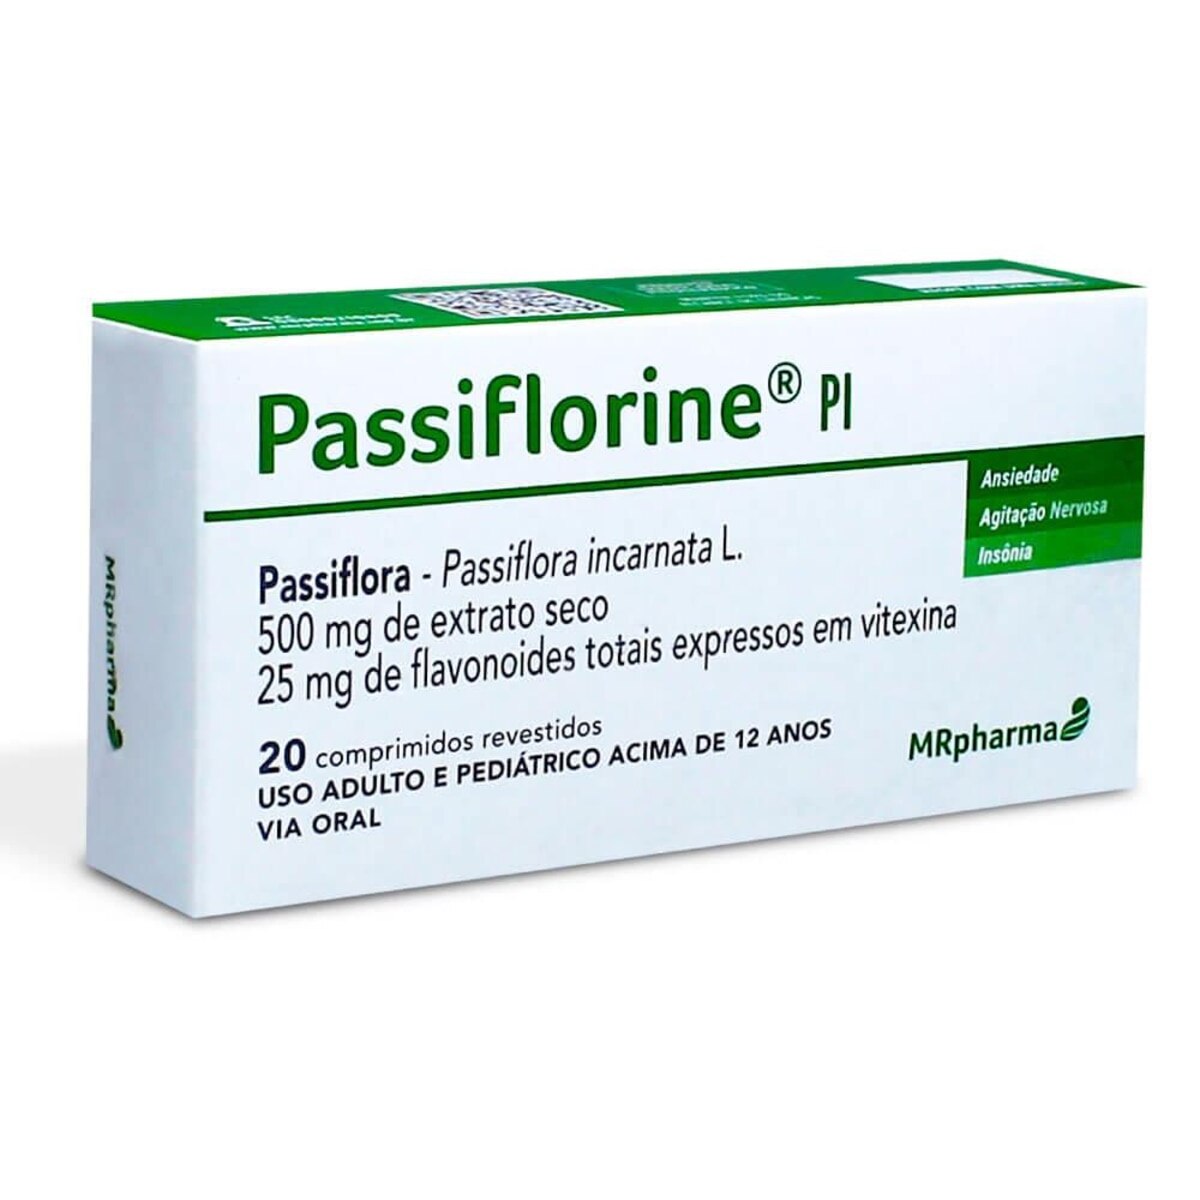 Passiflorine PI 500mg 20 Comprimidos Revestidos